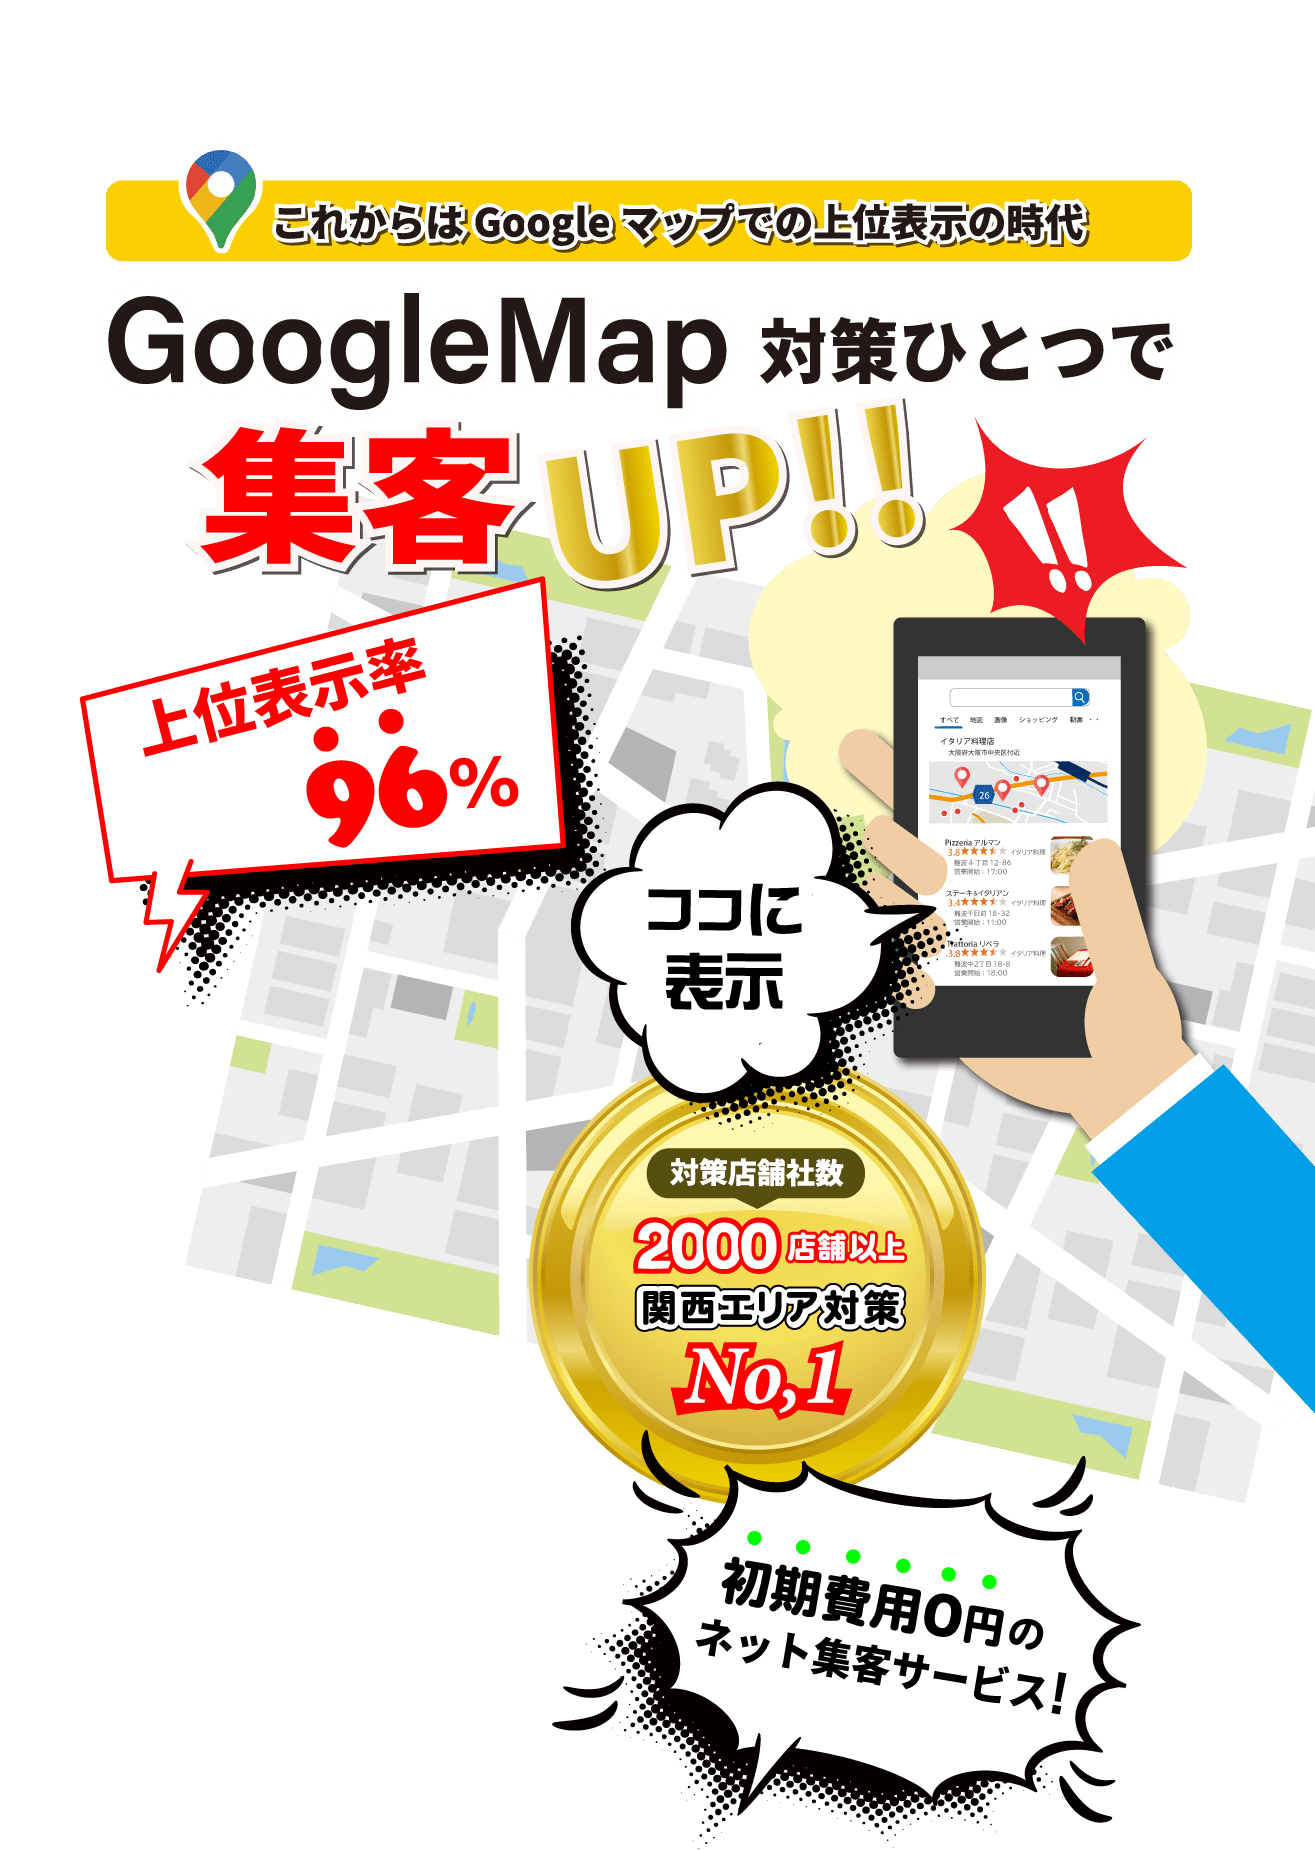 GoogleMap対策は大阪MEO.com